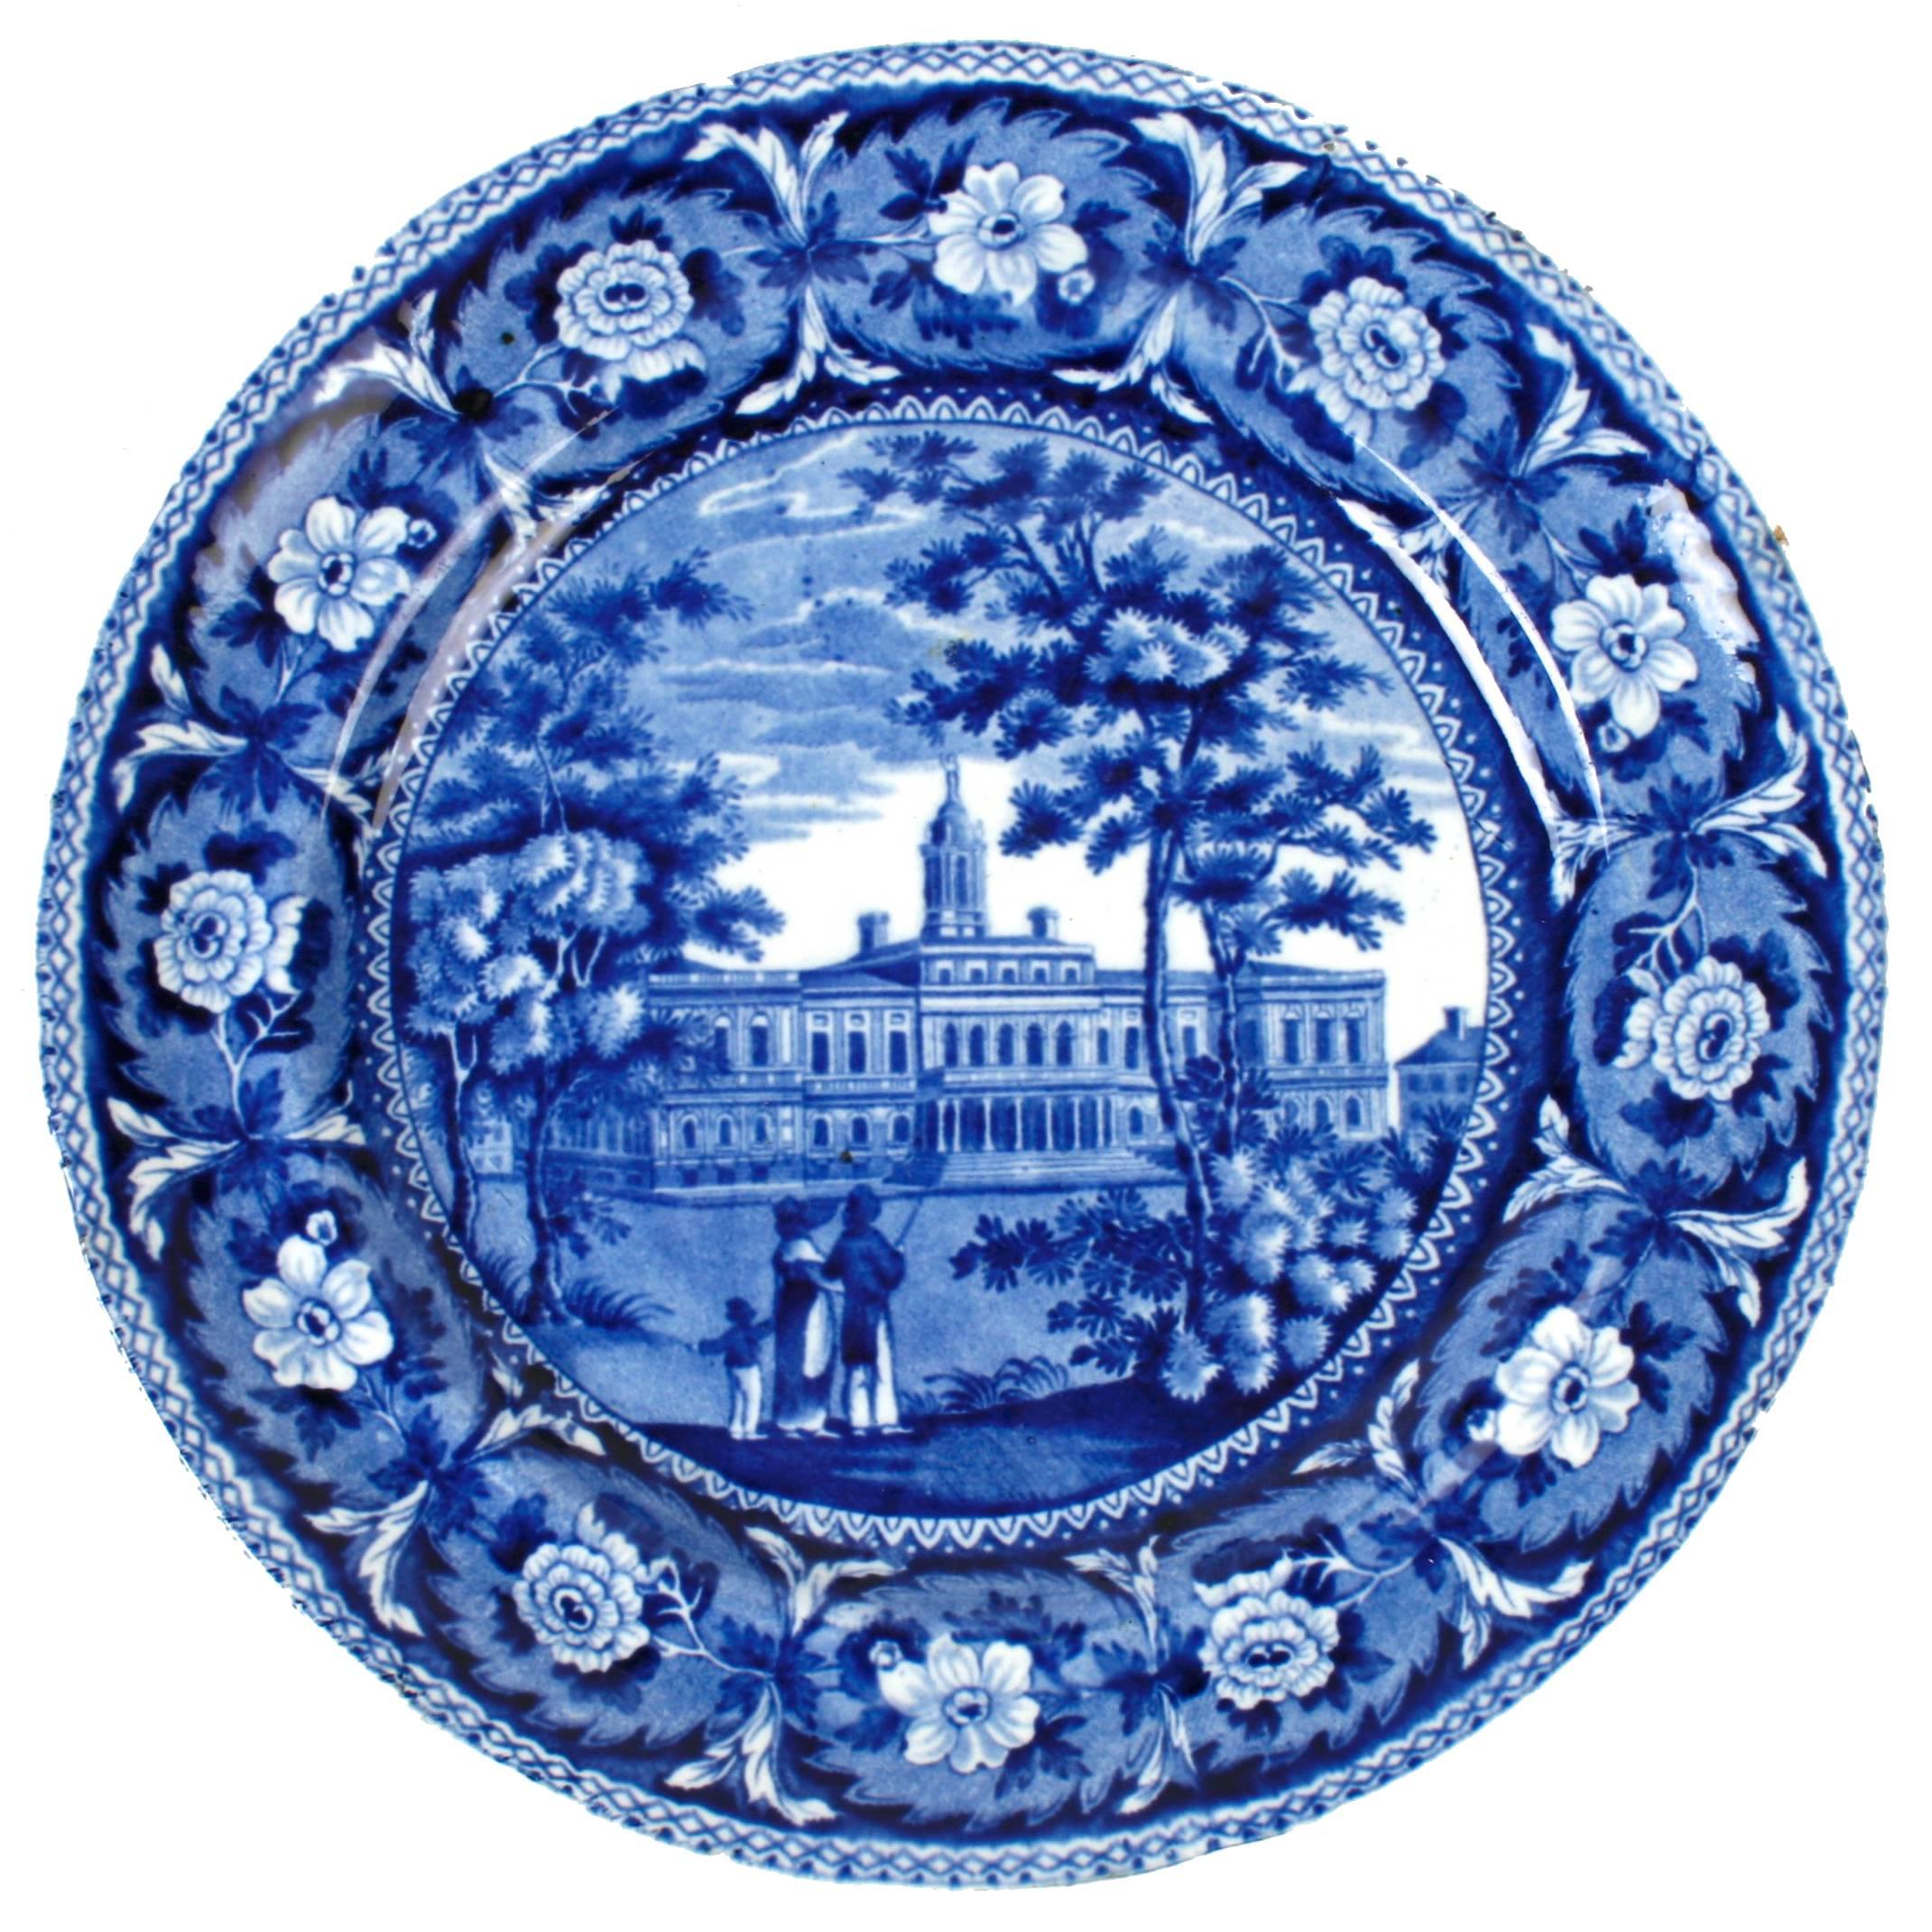 City Hall New York Blue Staffordshire Plate by J & W Ridgway